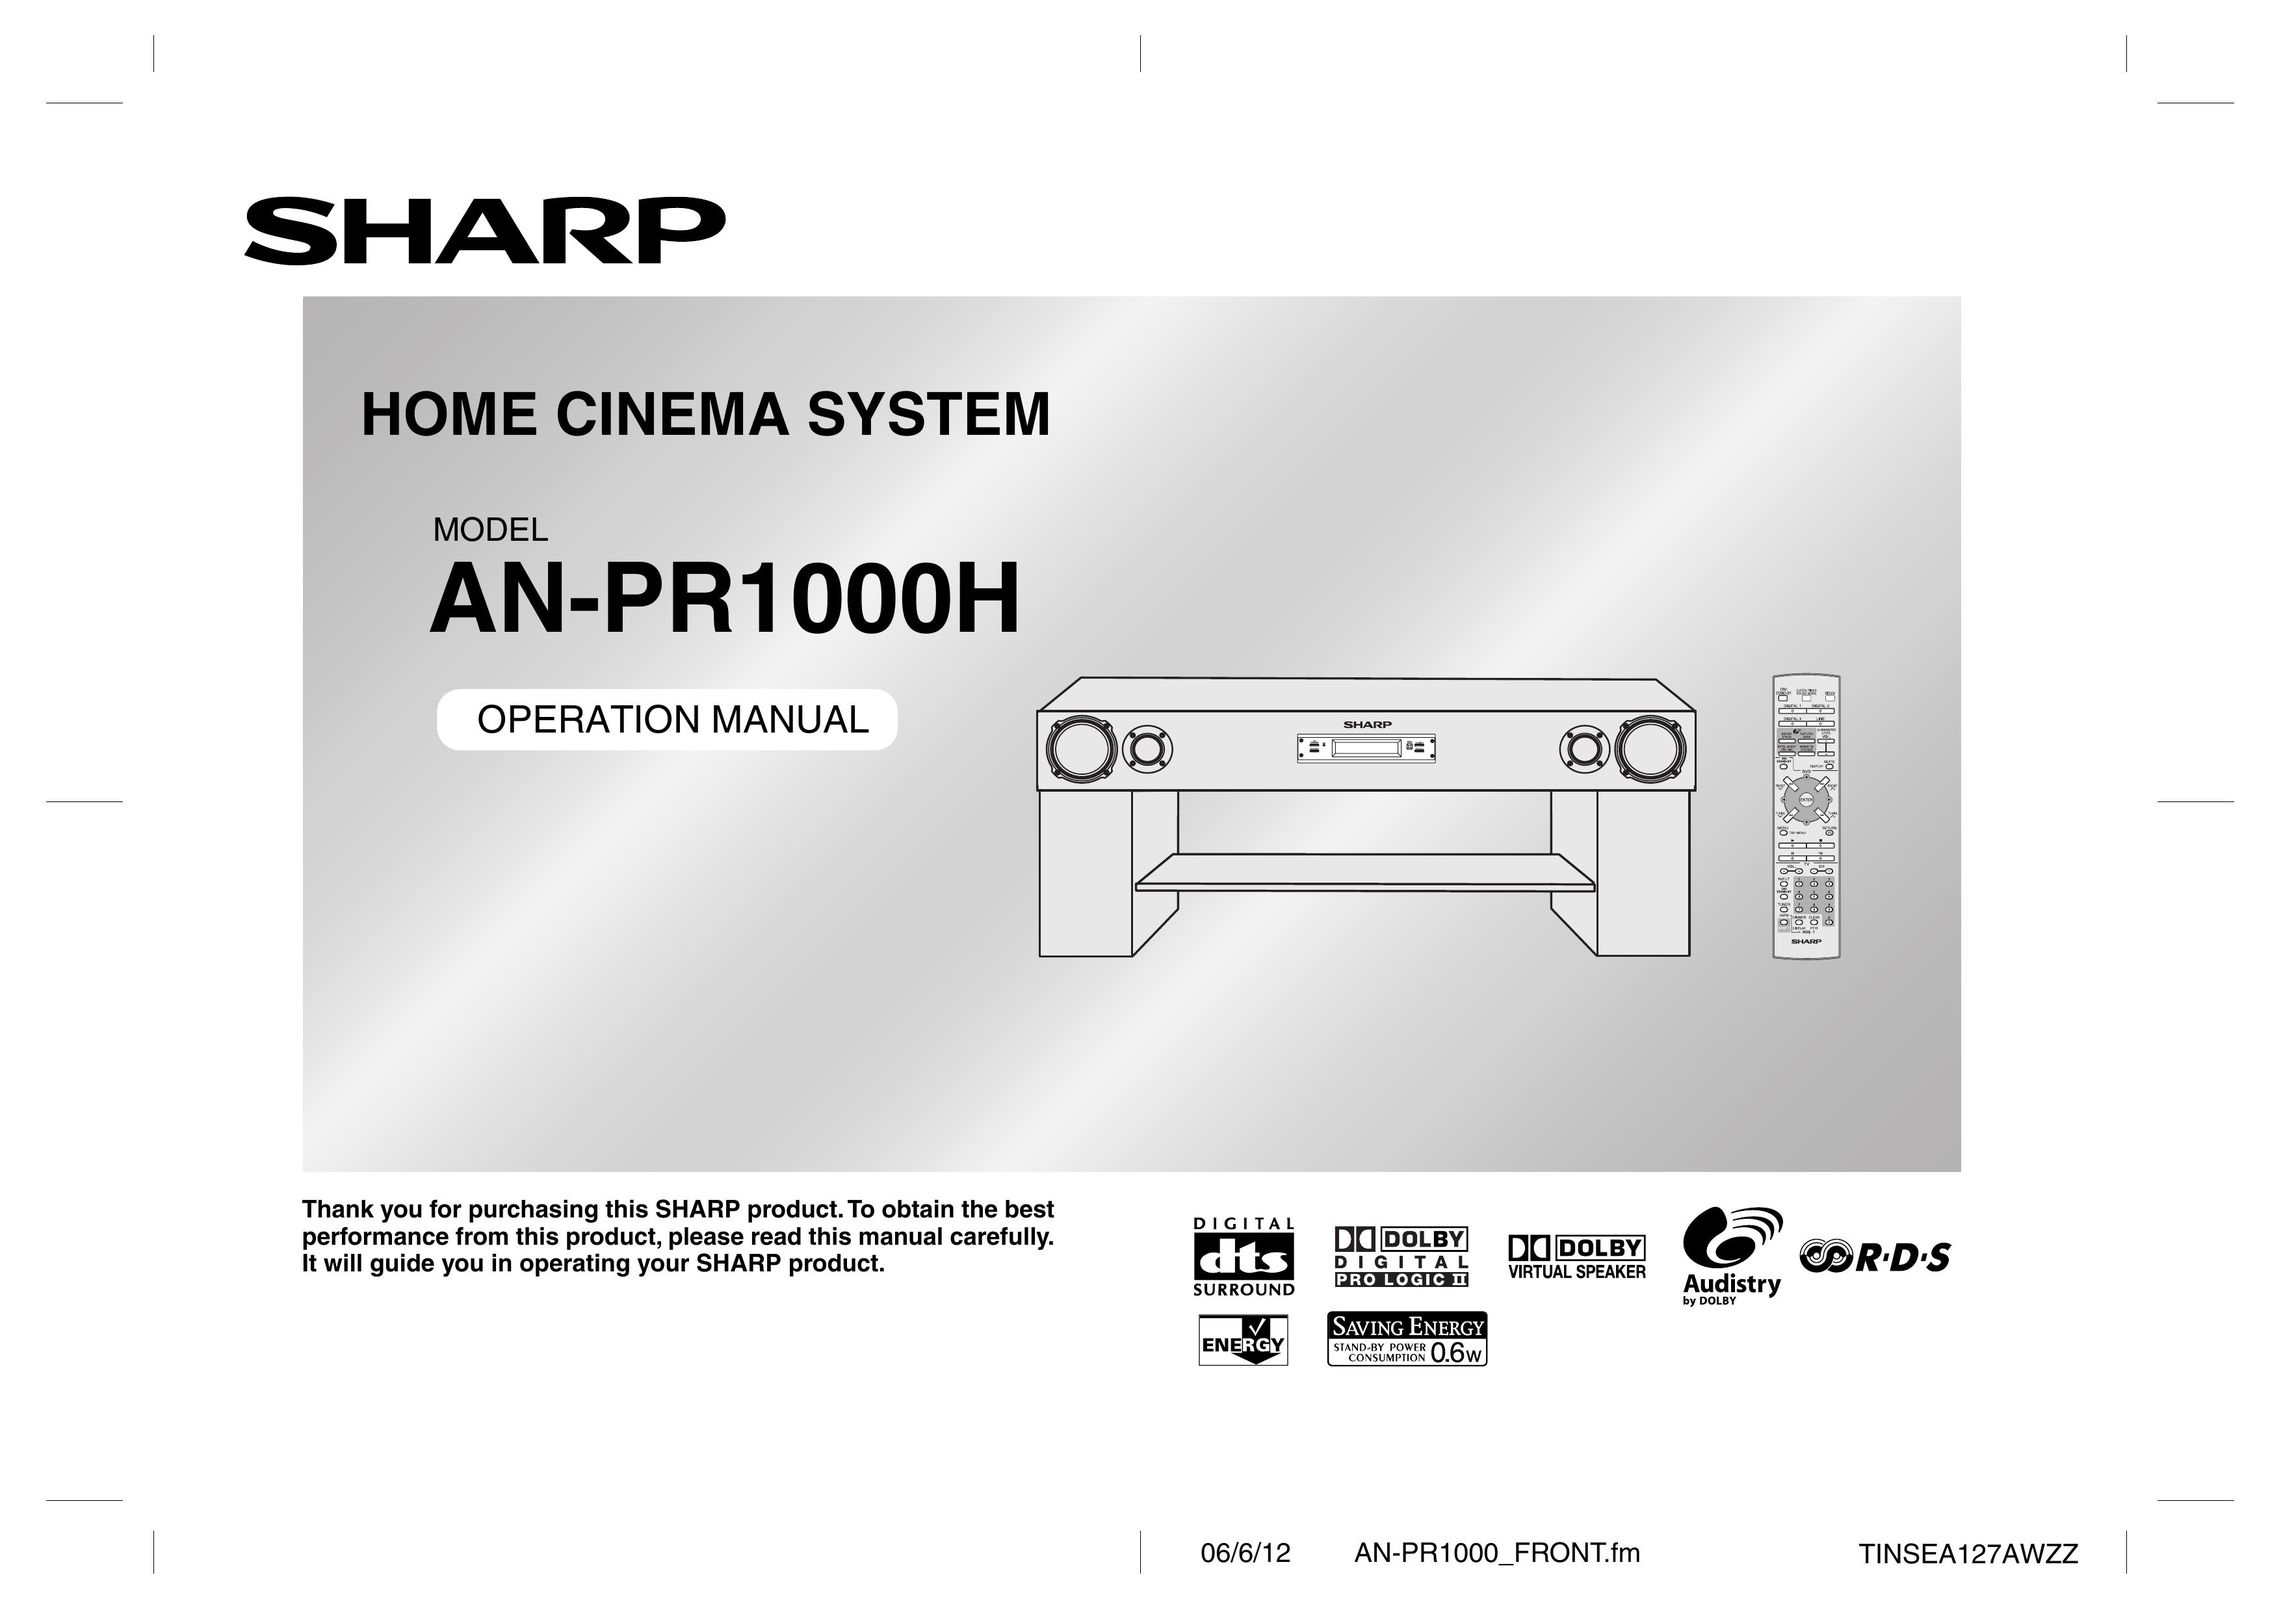 Sharp AN-PR1000H Home Theater System User Manual